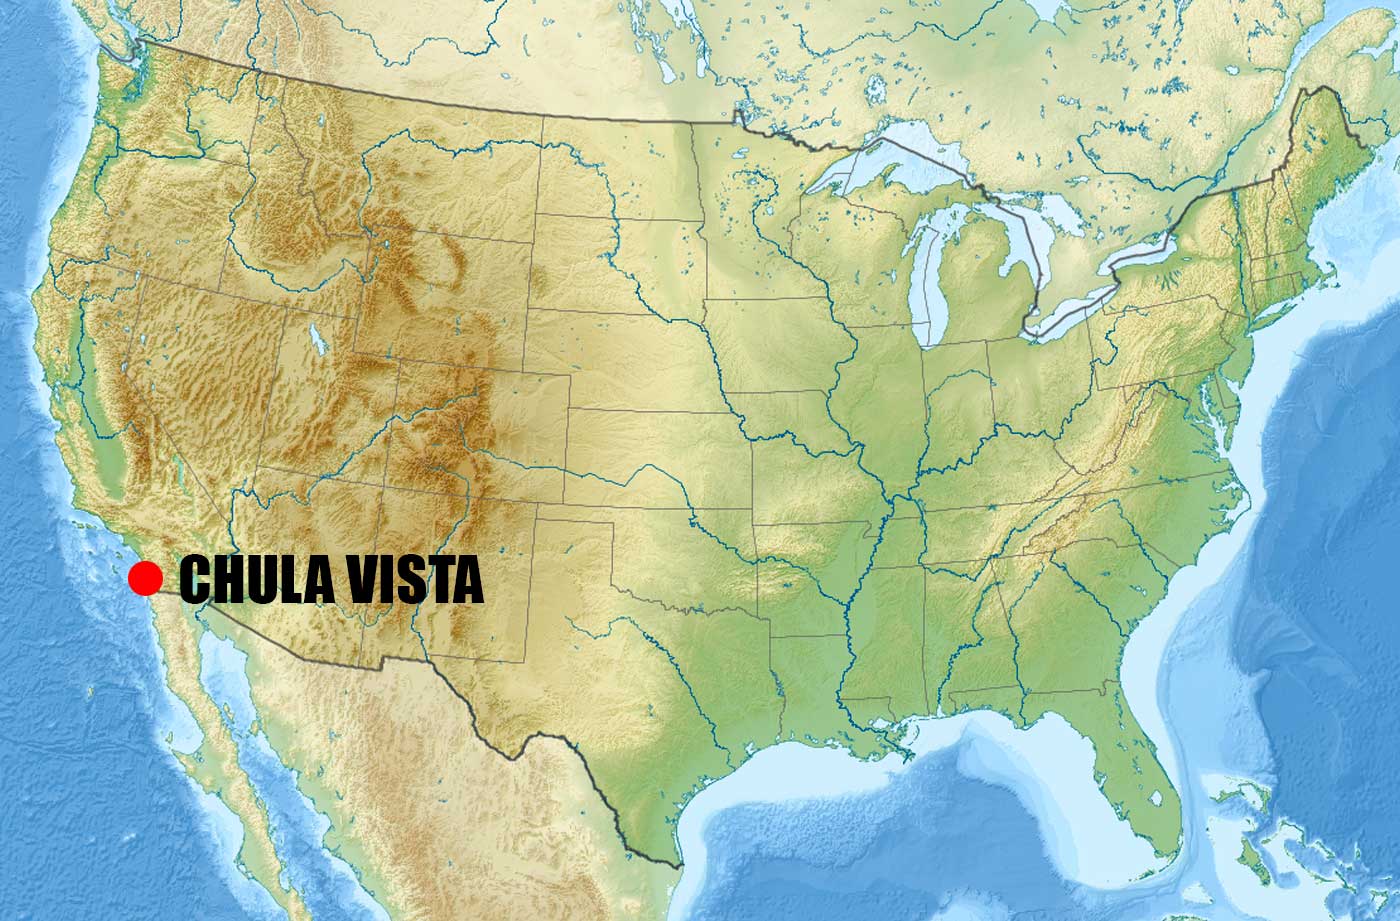 Location of Chula Vista on US California Map